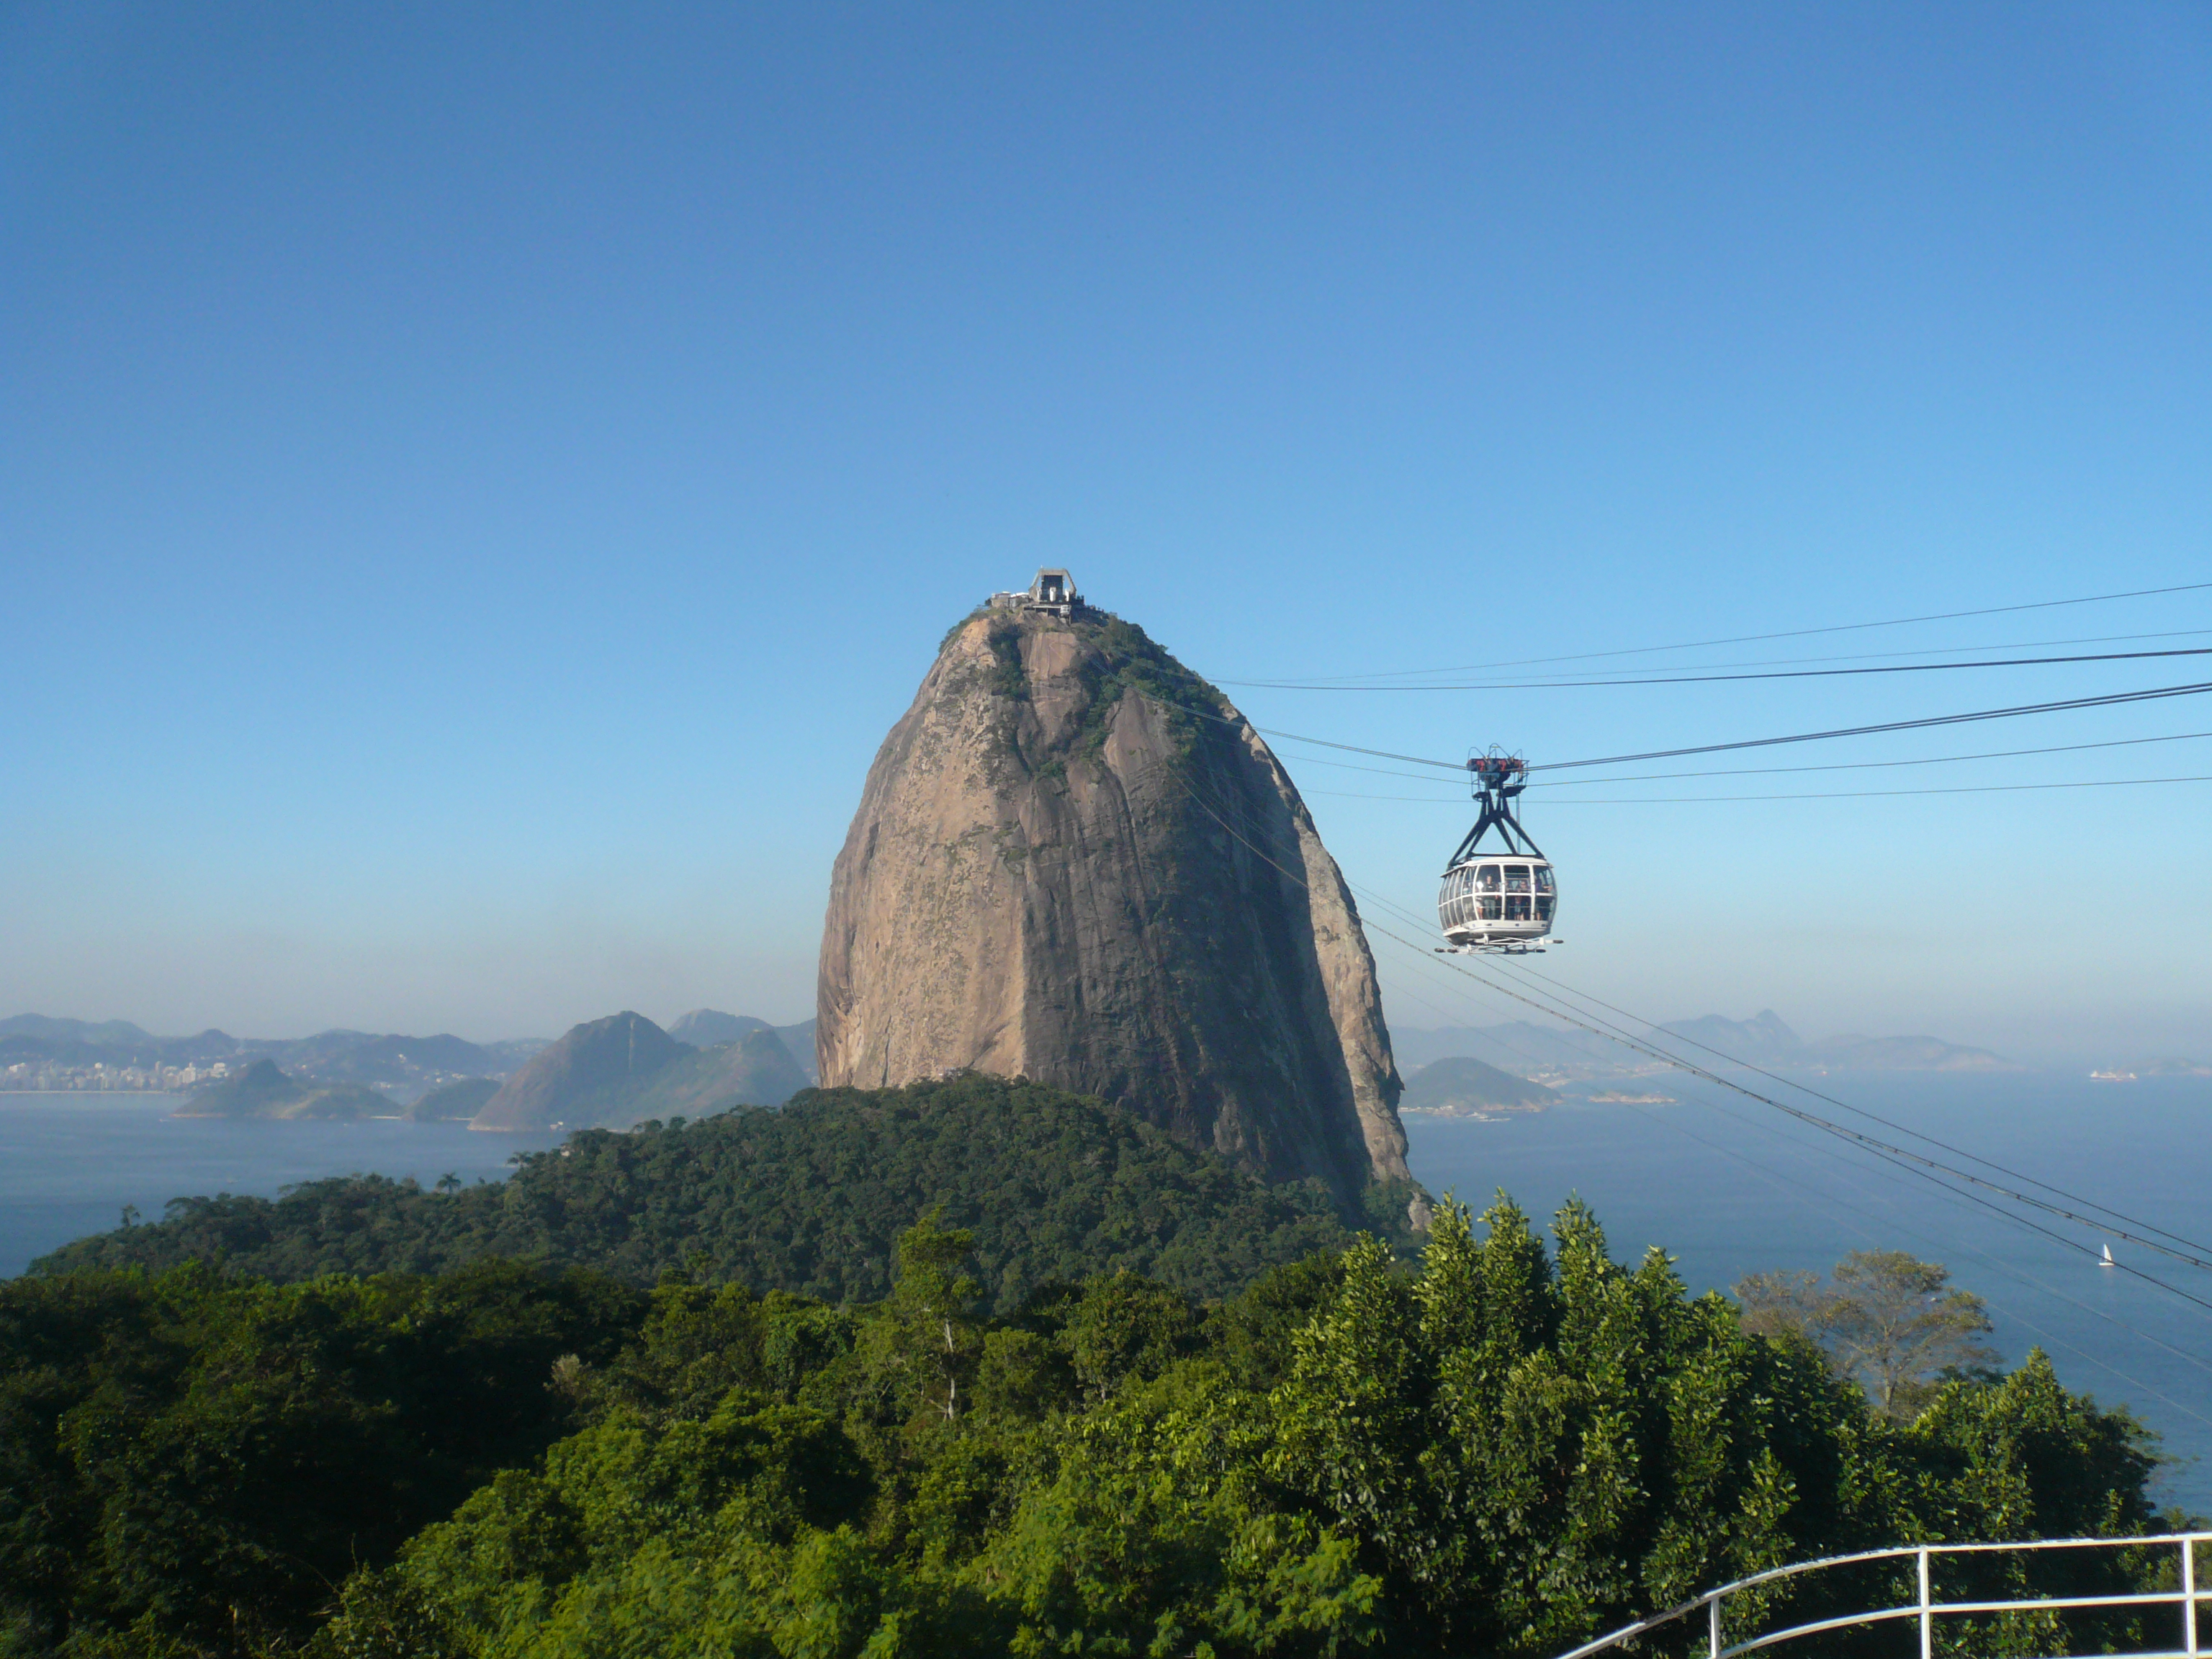 http://upload.wikimedia.org/wikipedia/commons/5/5f/Sugarloaf_mountain_in_Rio_de_Janeiro.jpg